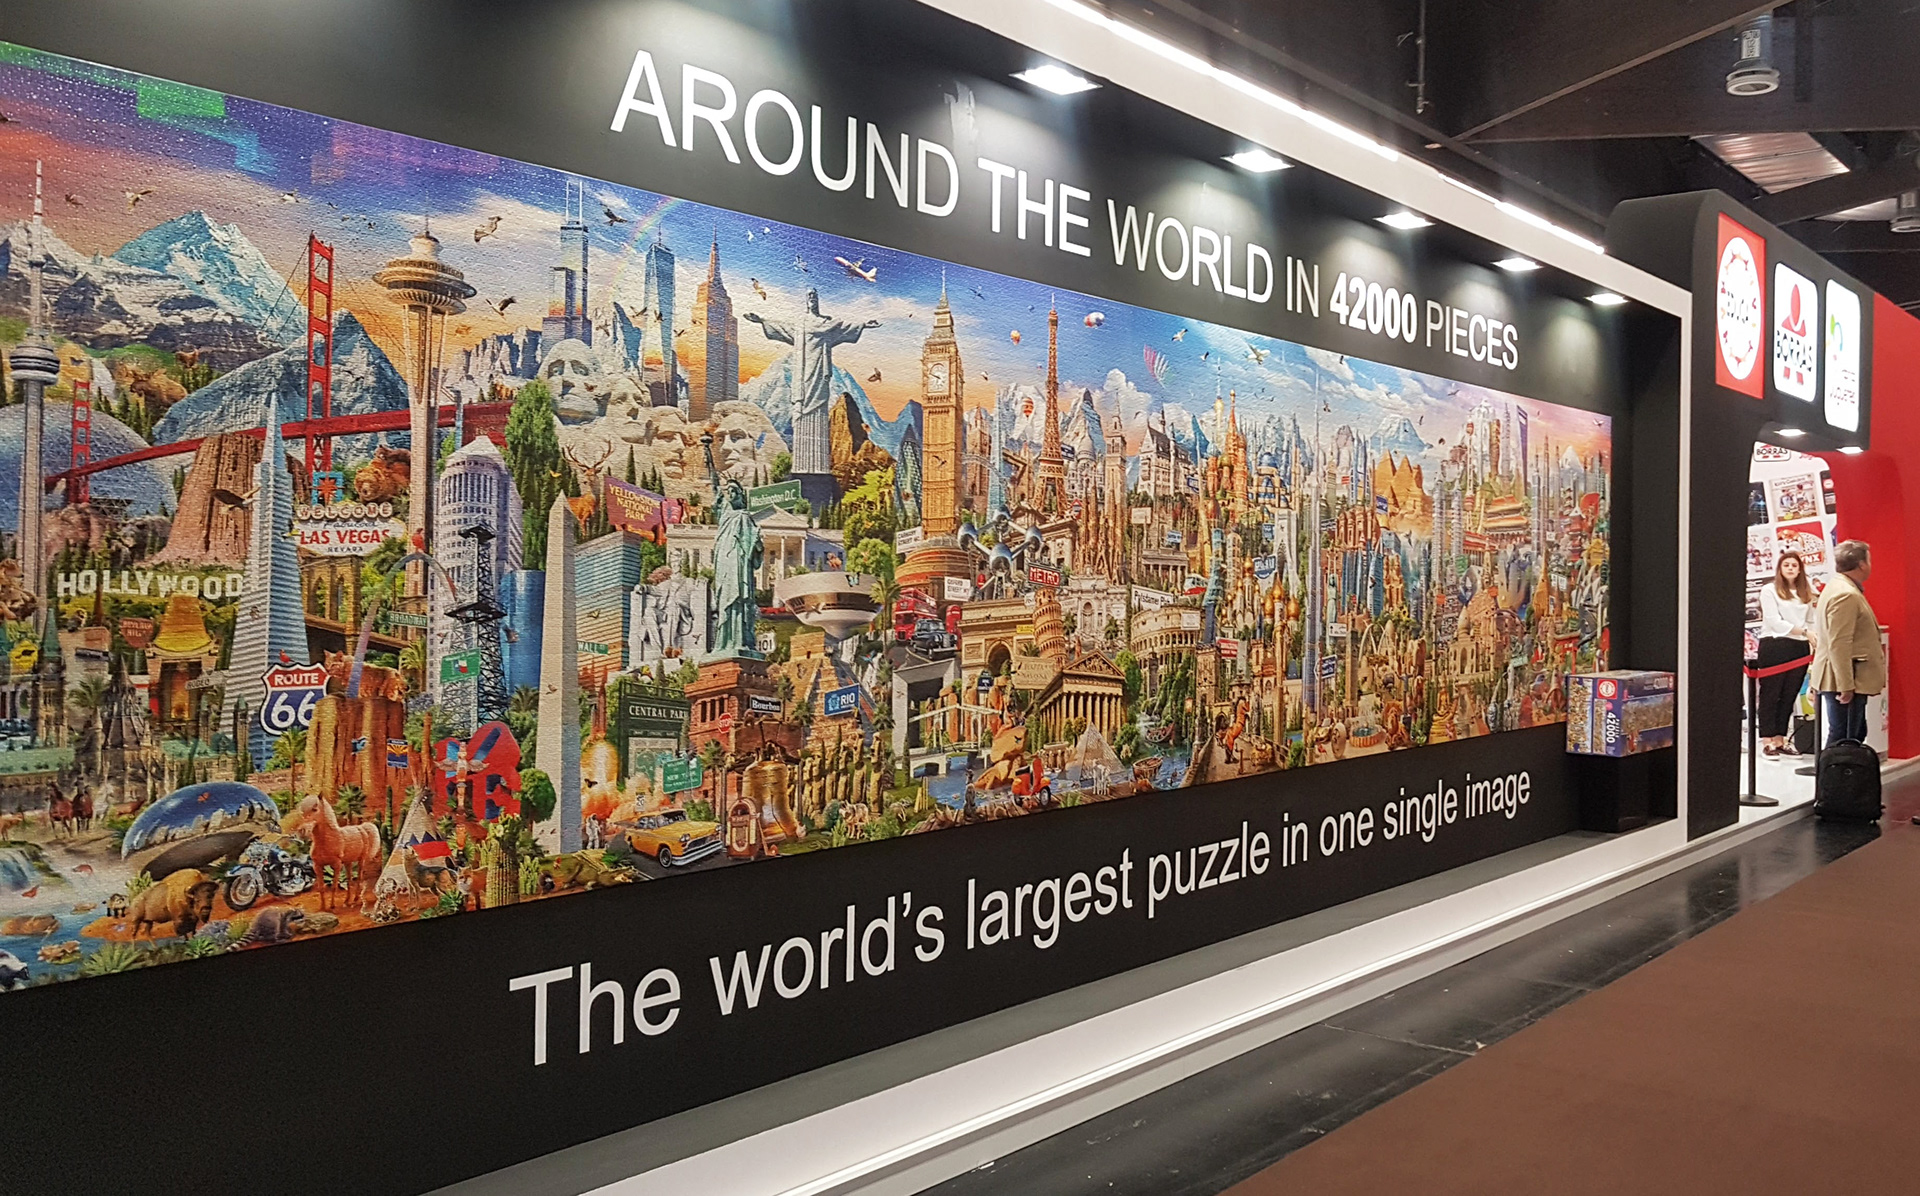 Puzzle Around the world, 42 000 pieces